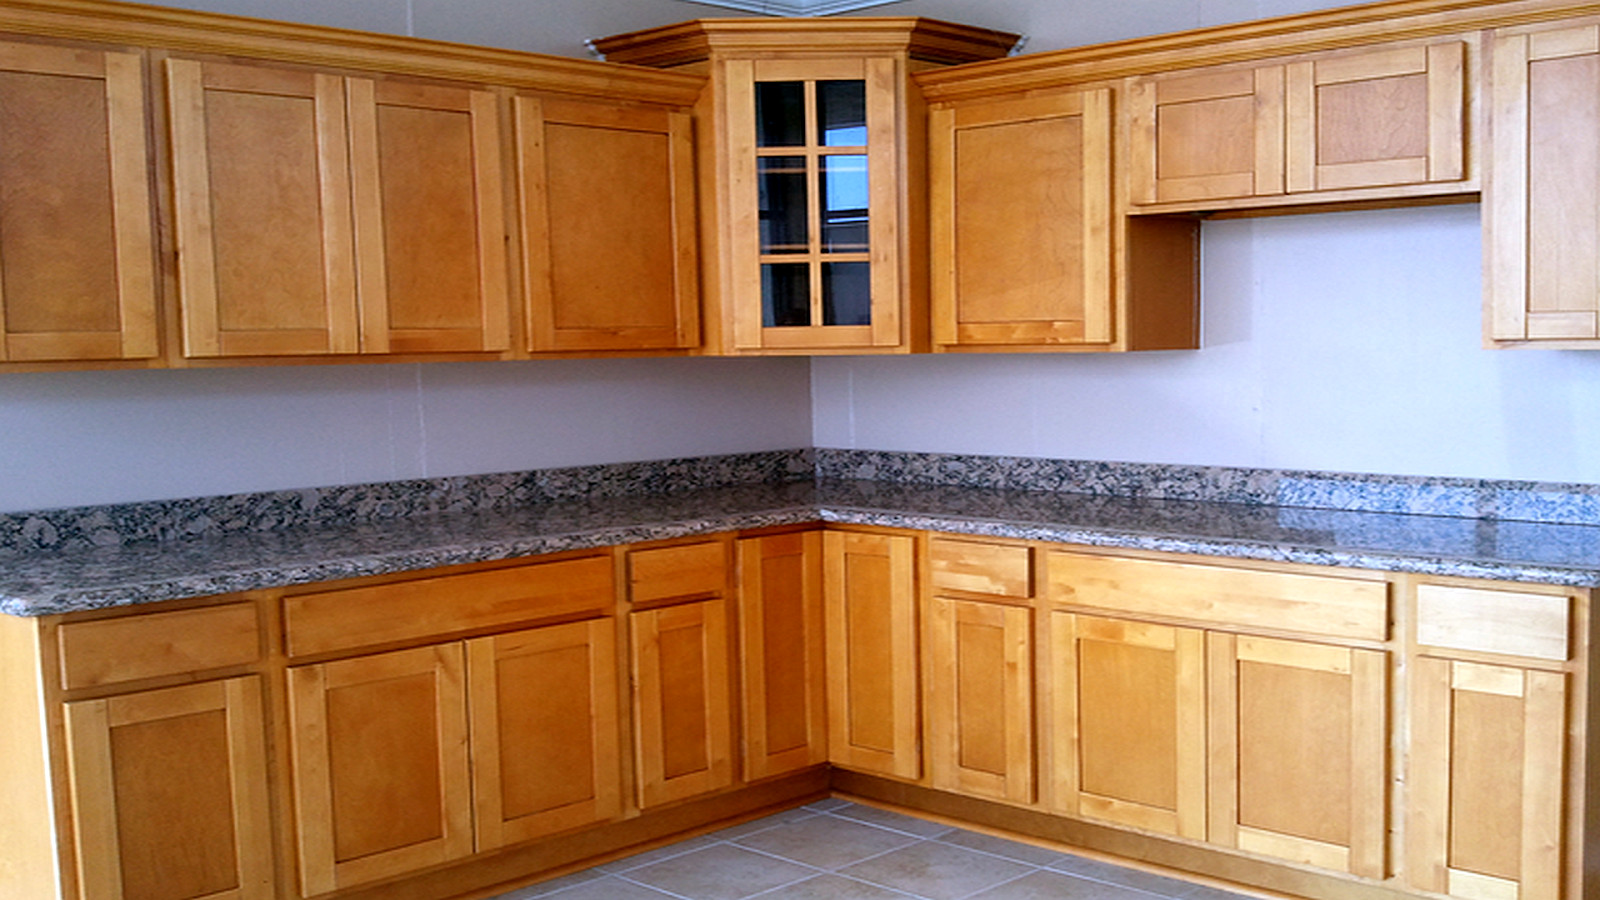 25 Wonderful Home Depot Unfinished Kitchen Cabinets - Home, Decoration ...